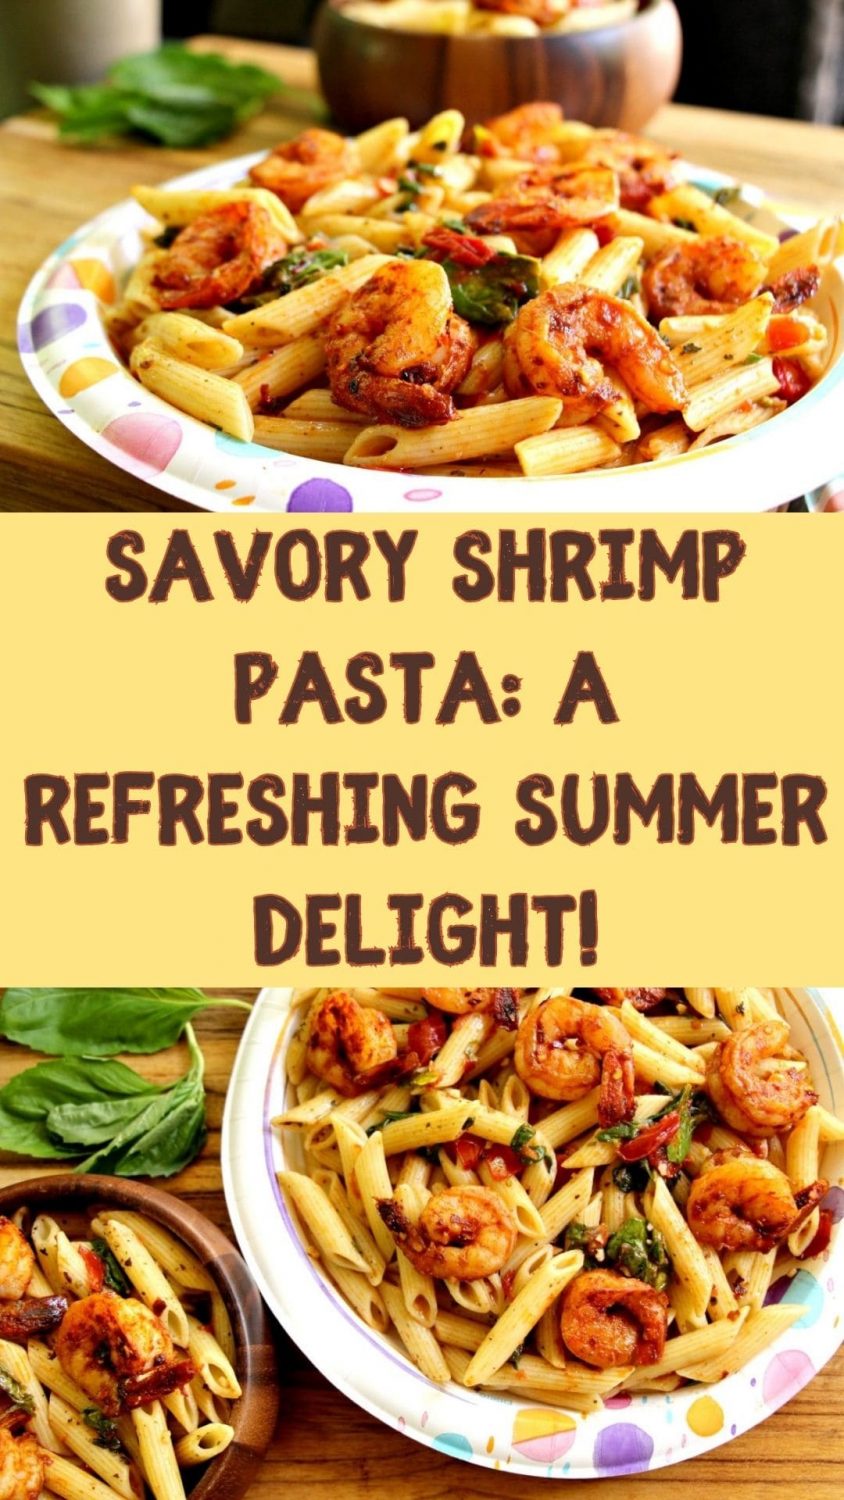 Savory Shrimp Pasta: A Refreshing Summer Delight!